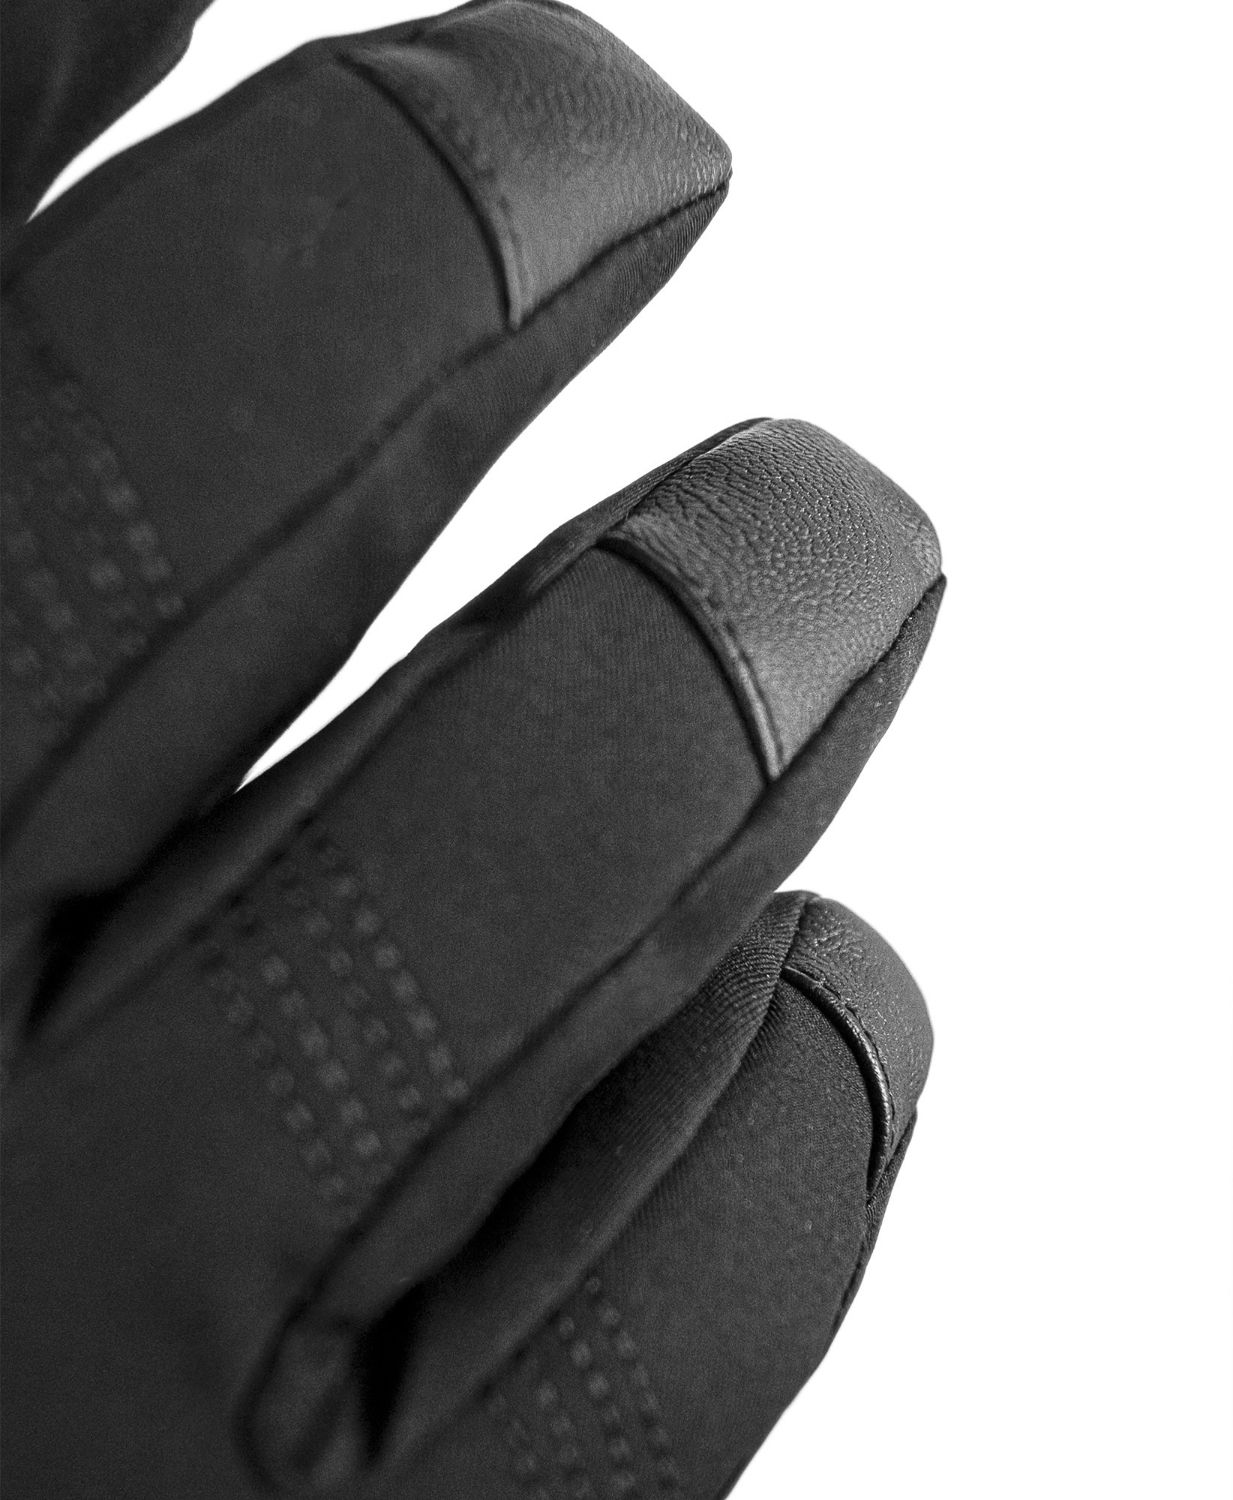 Reusch BLASTER GORE-TEX, moške smučarske rokavice, črna | Intersport